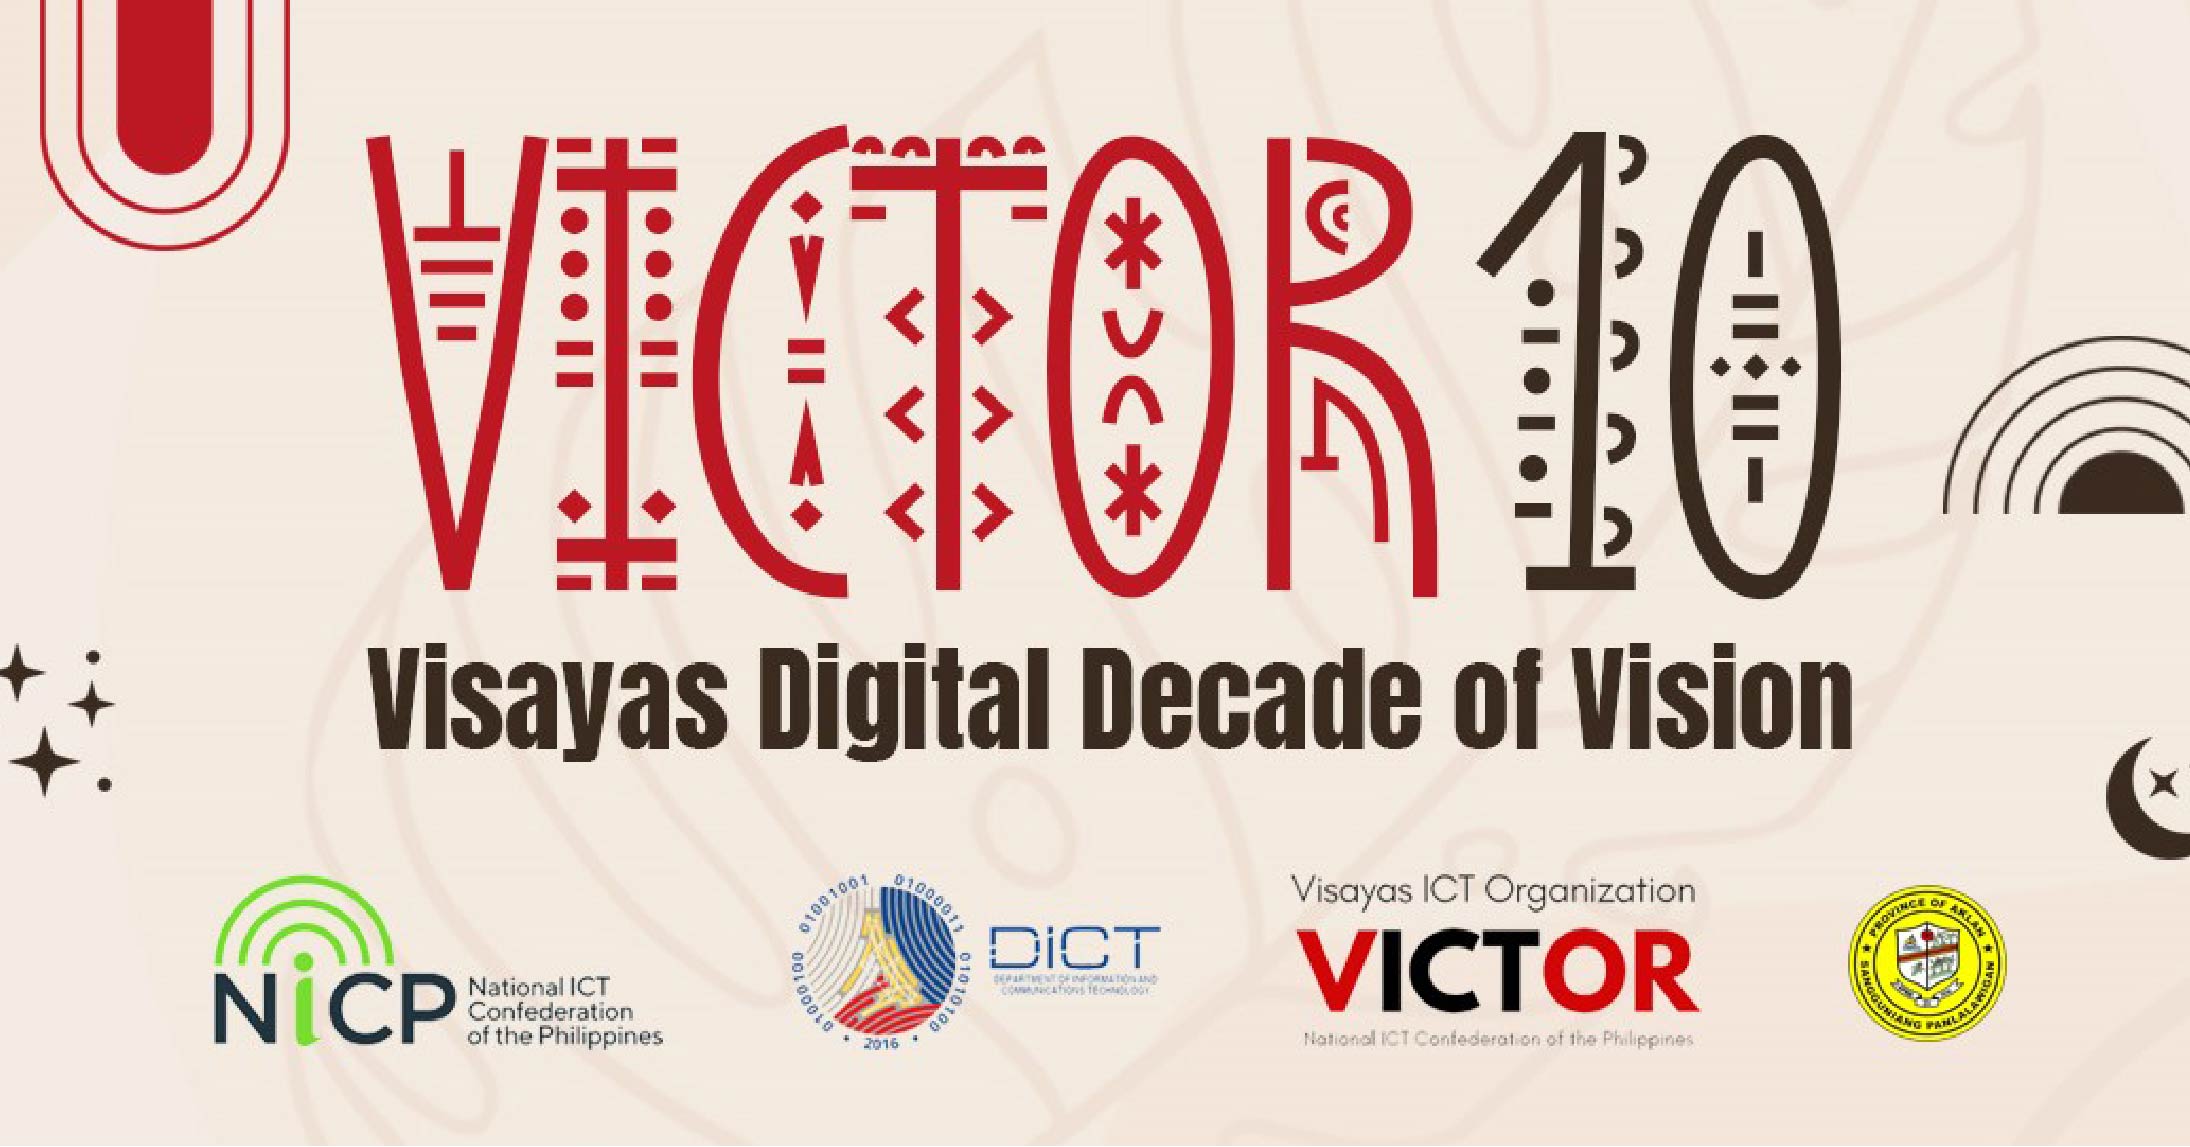 VICTOR10: Visayas Digital Decade of Vision